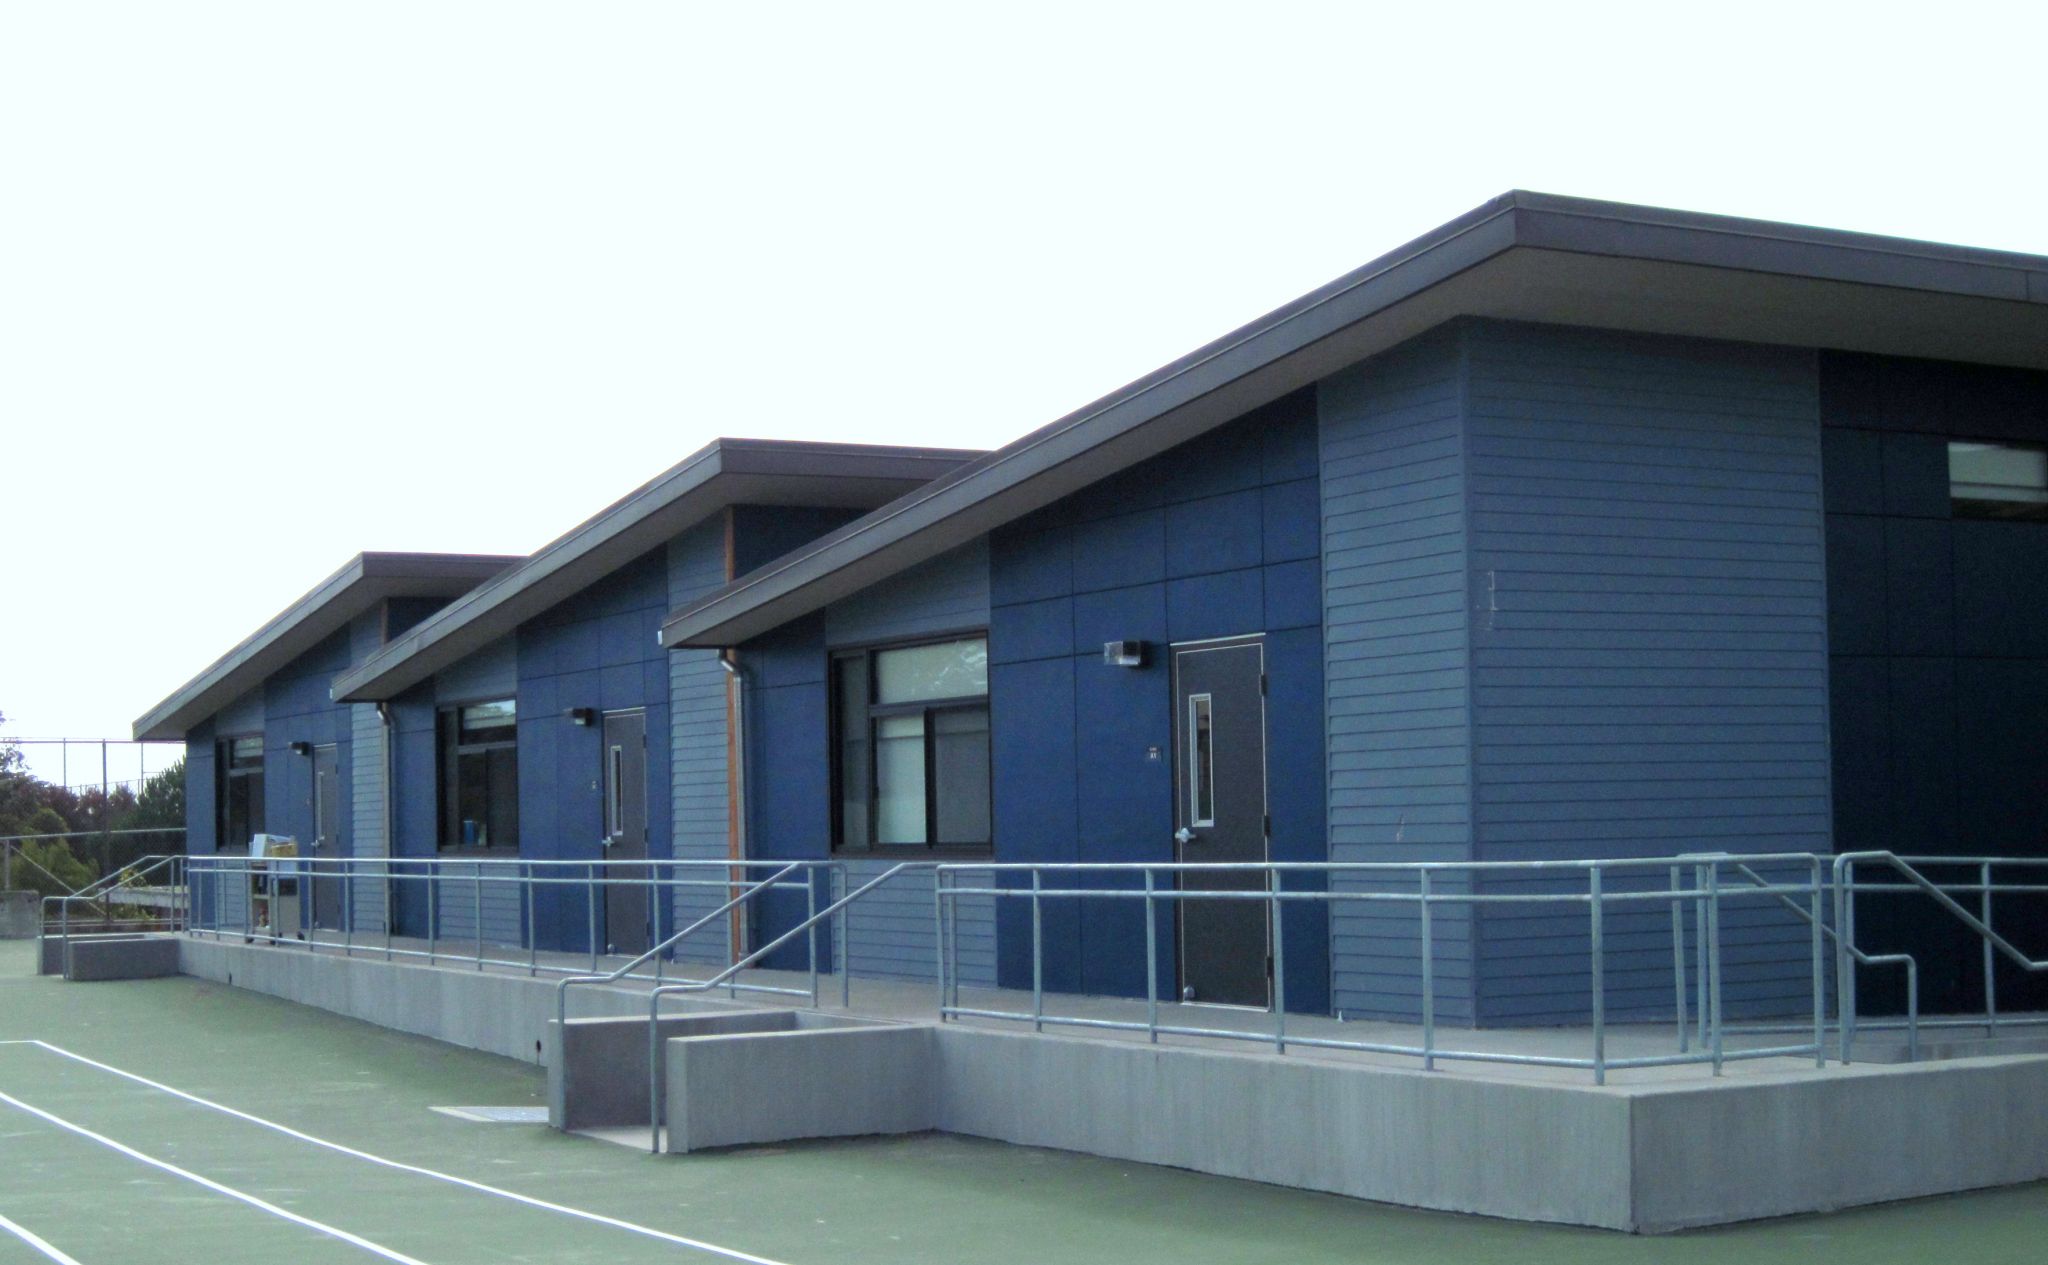 Exterior of Sunset Elementary School New Modular Classrooms